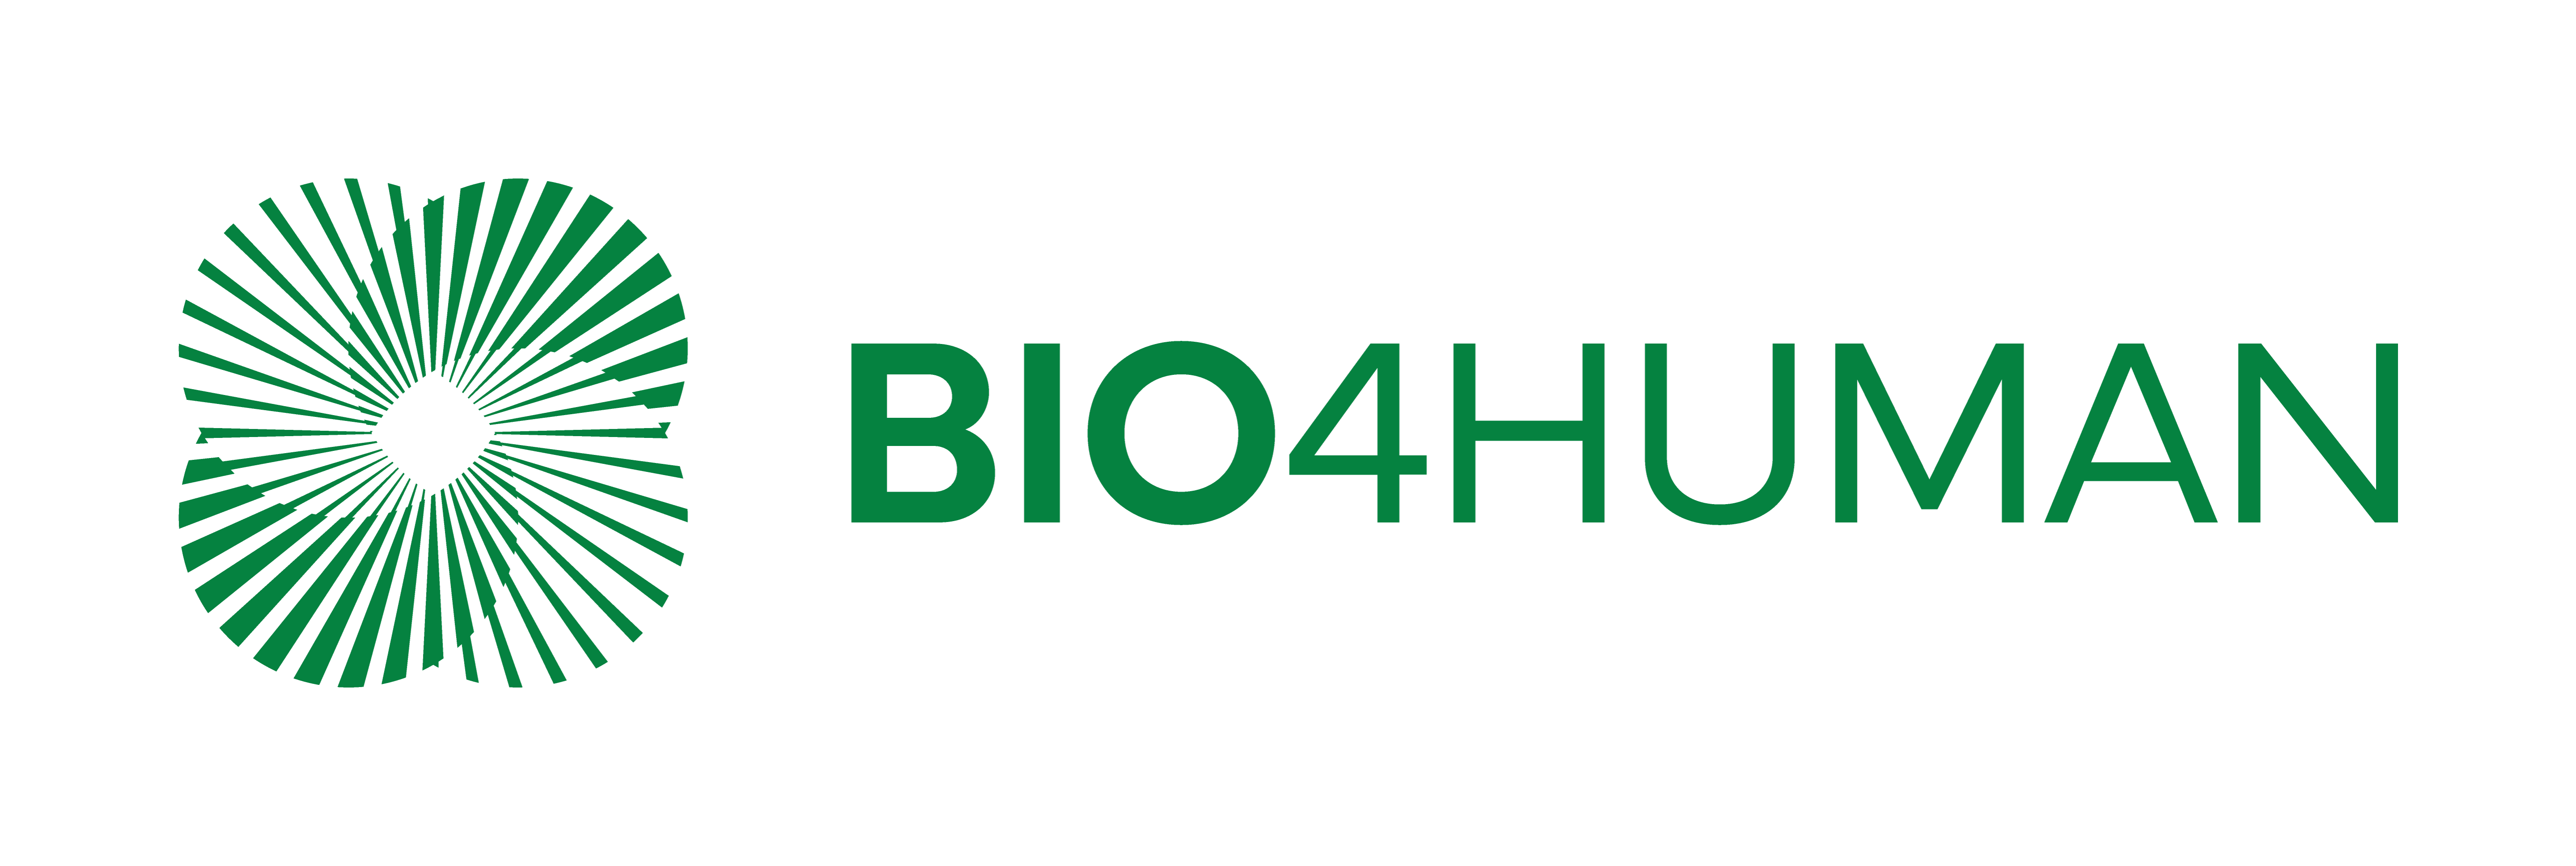 bio4human_primary_logo_green